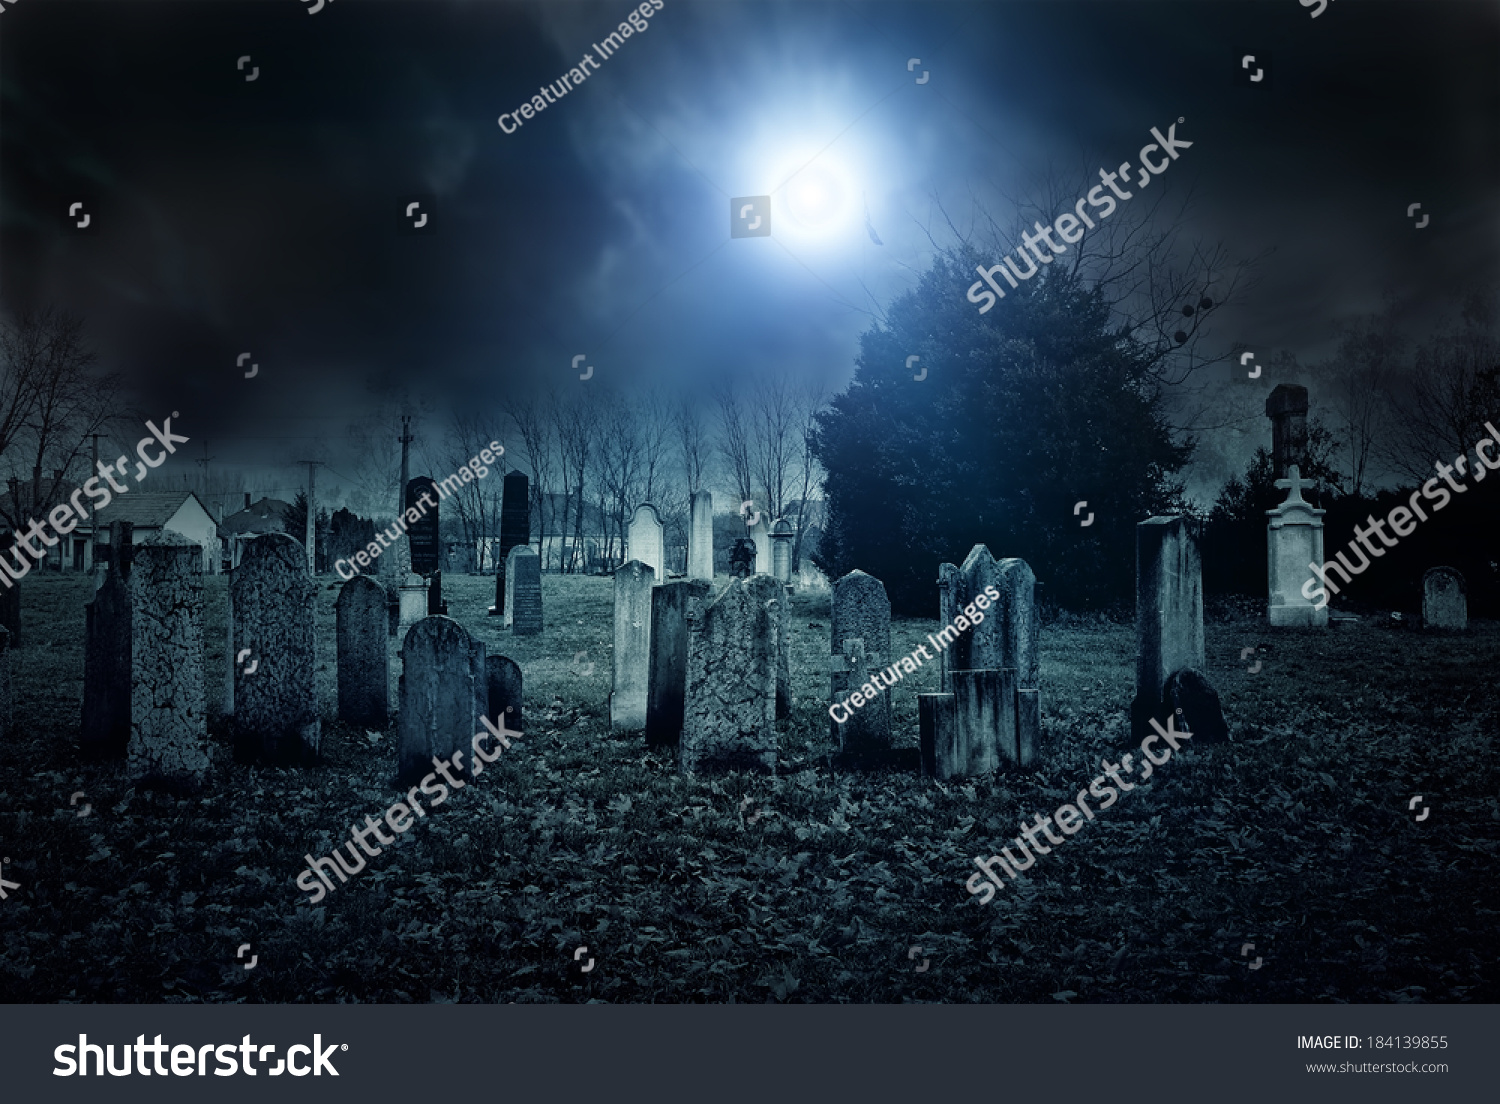 Cemetery night #184139855